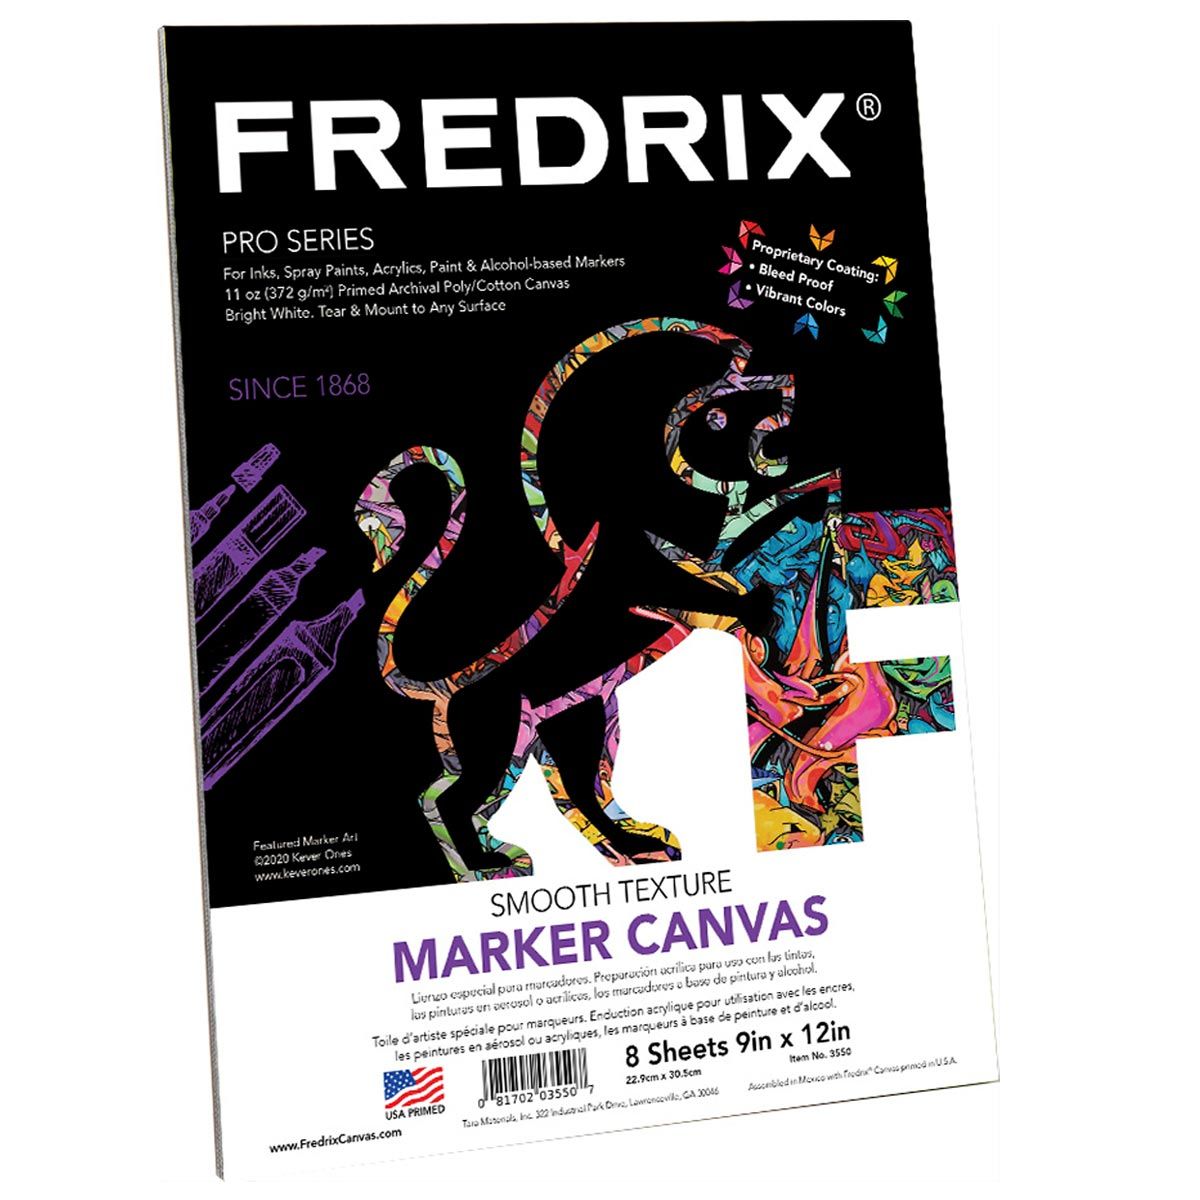 Fredrix PRO Series Marker Canvas Pad 9 x 12 inches